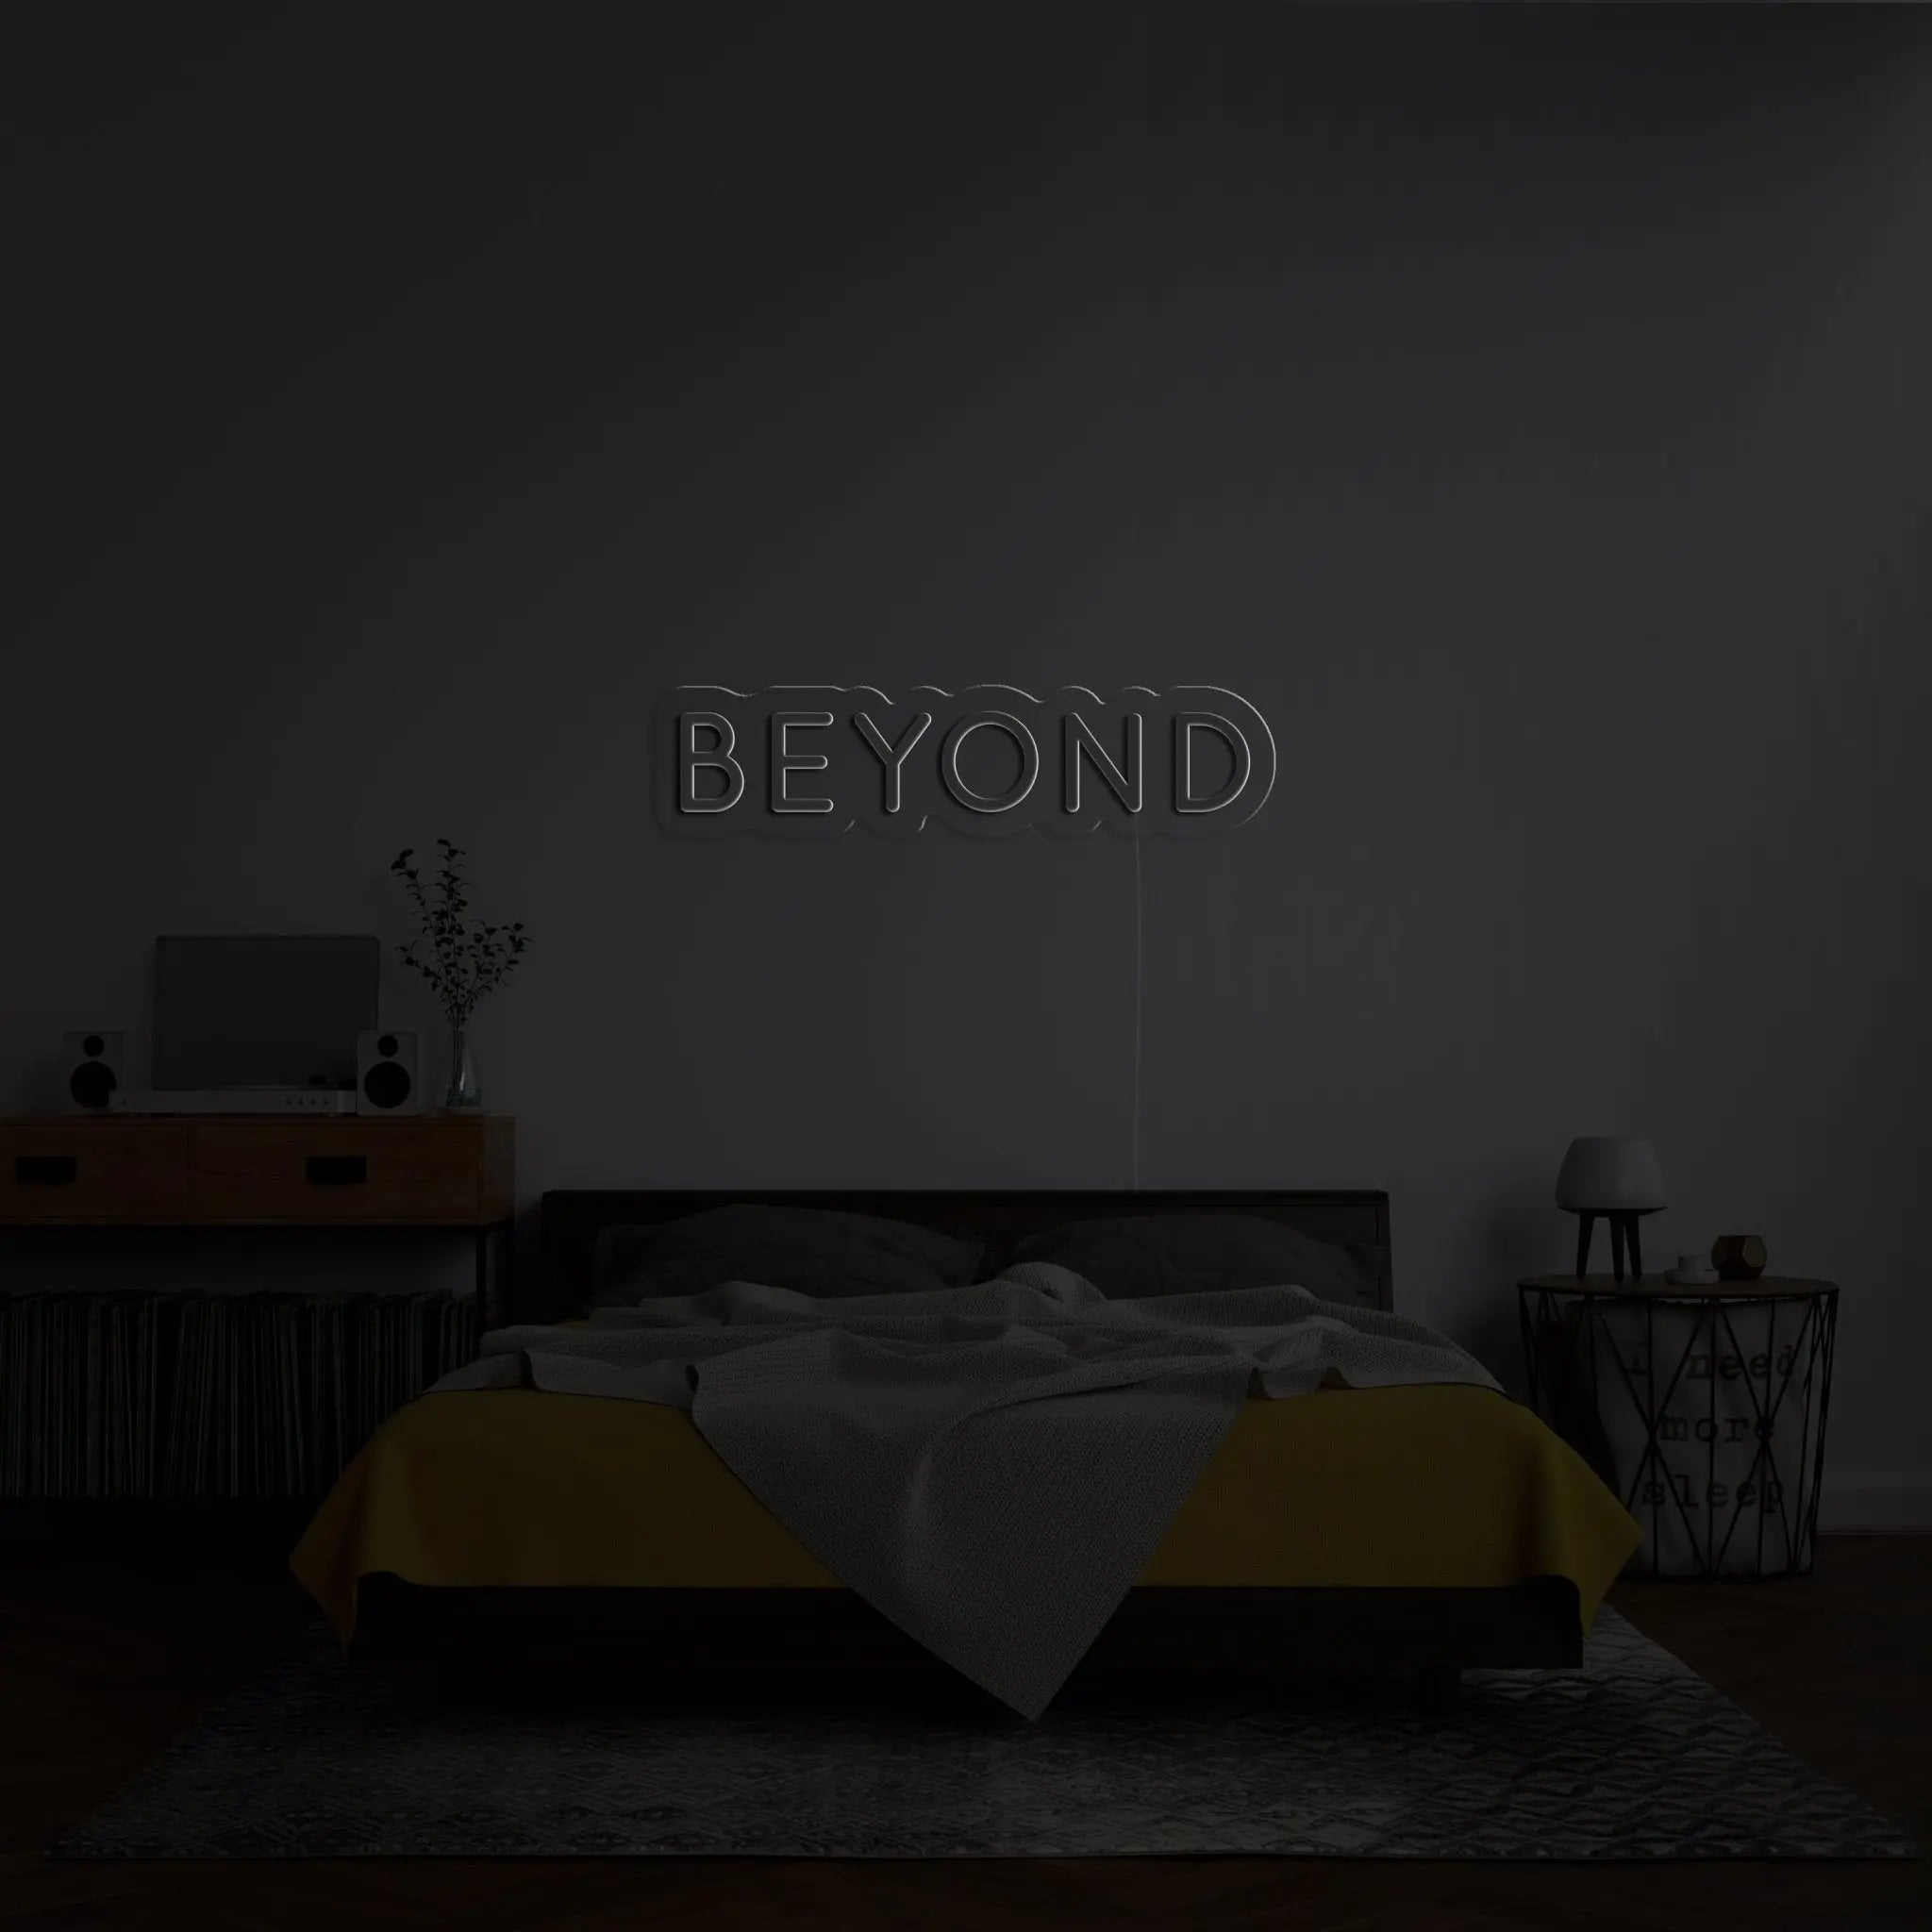 'Beyond' Neon Sign - neonaffair